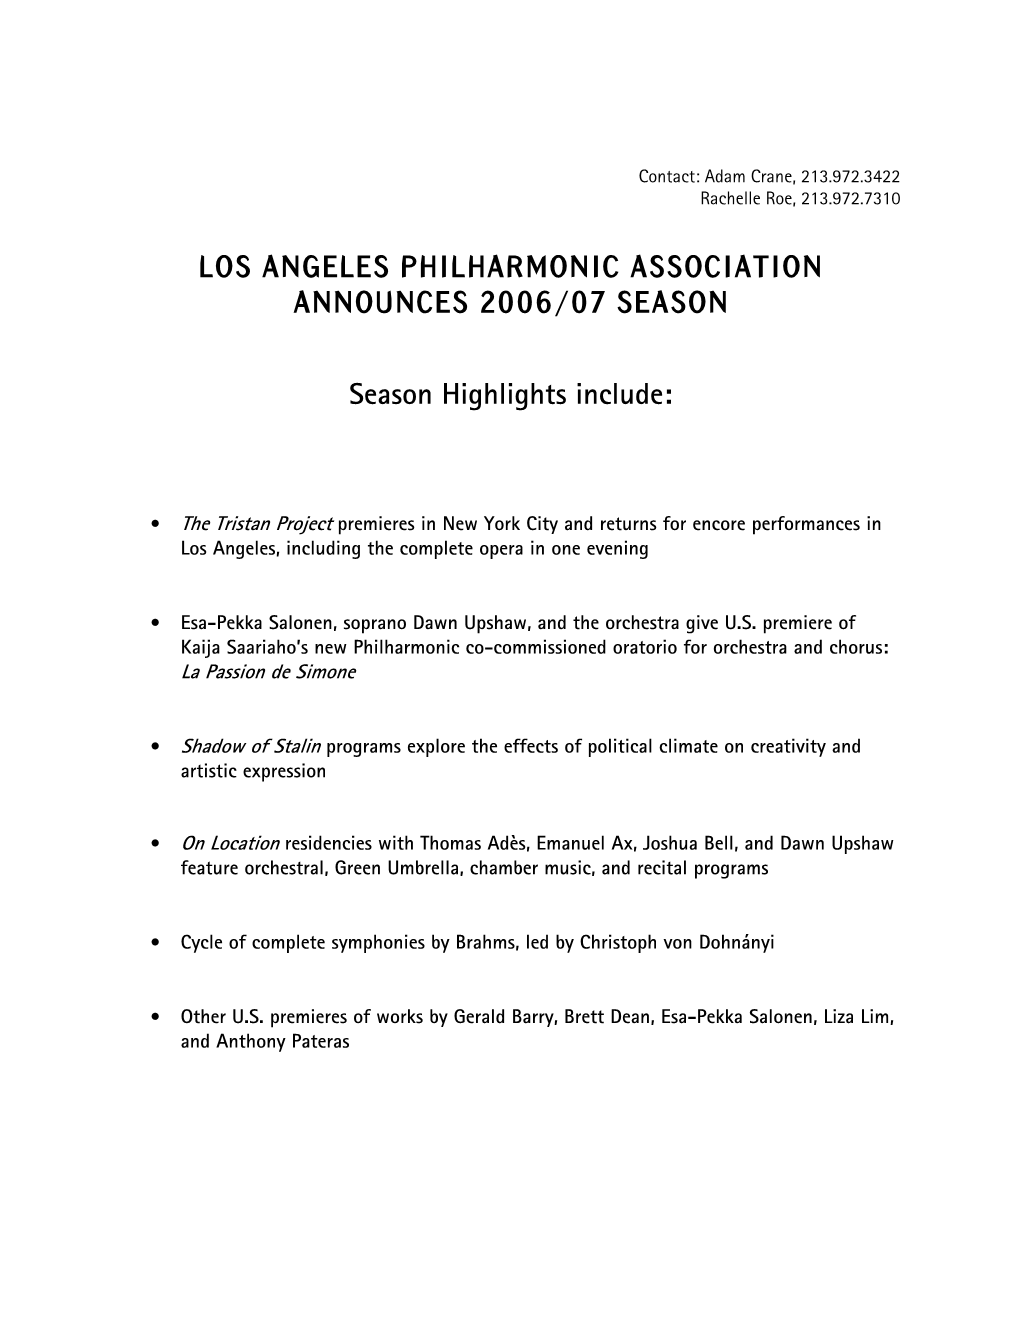 2006/07 Season Press Release